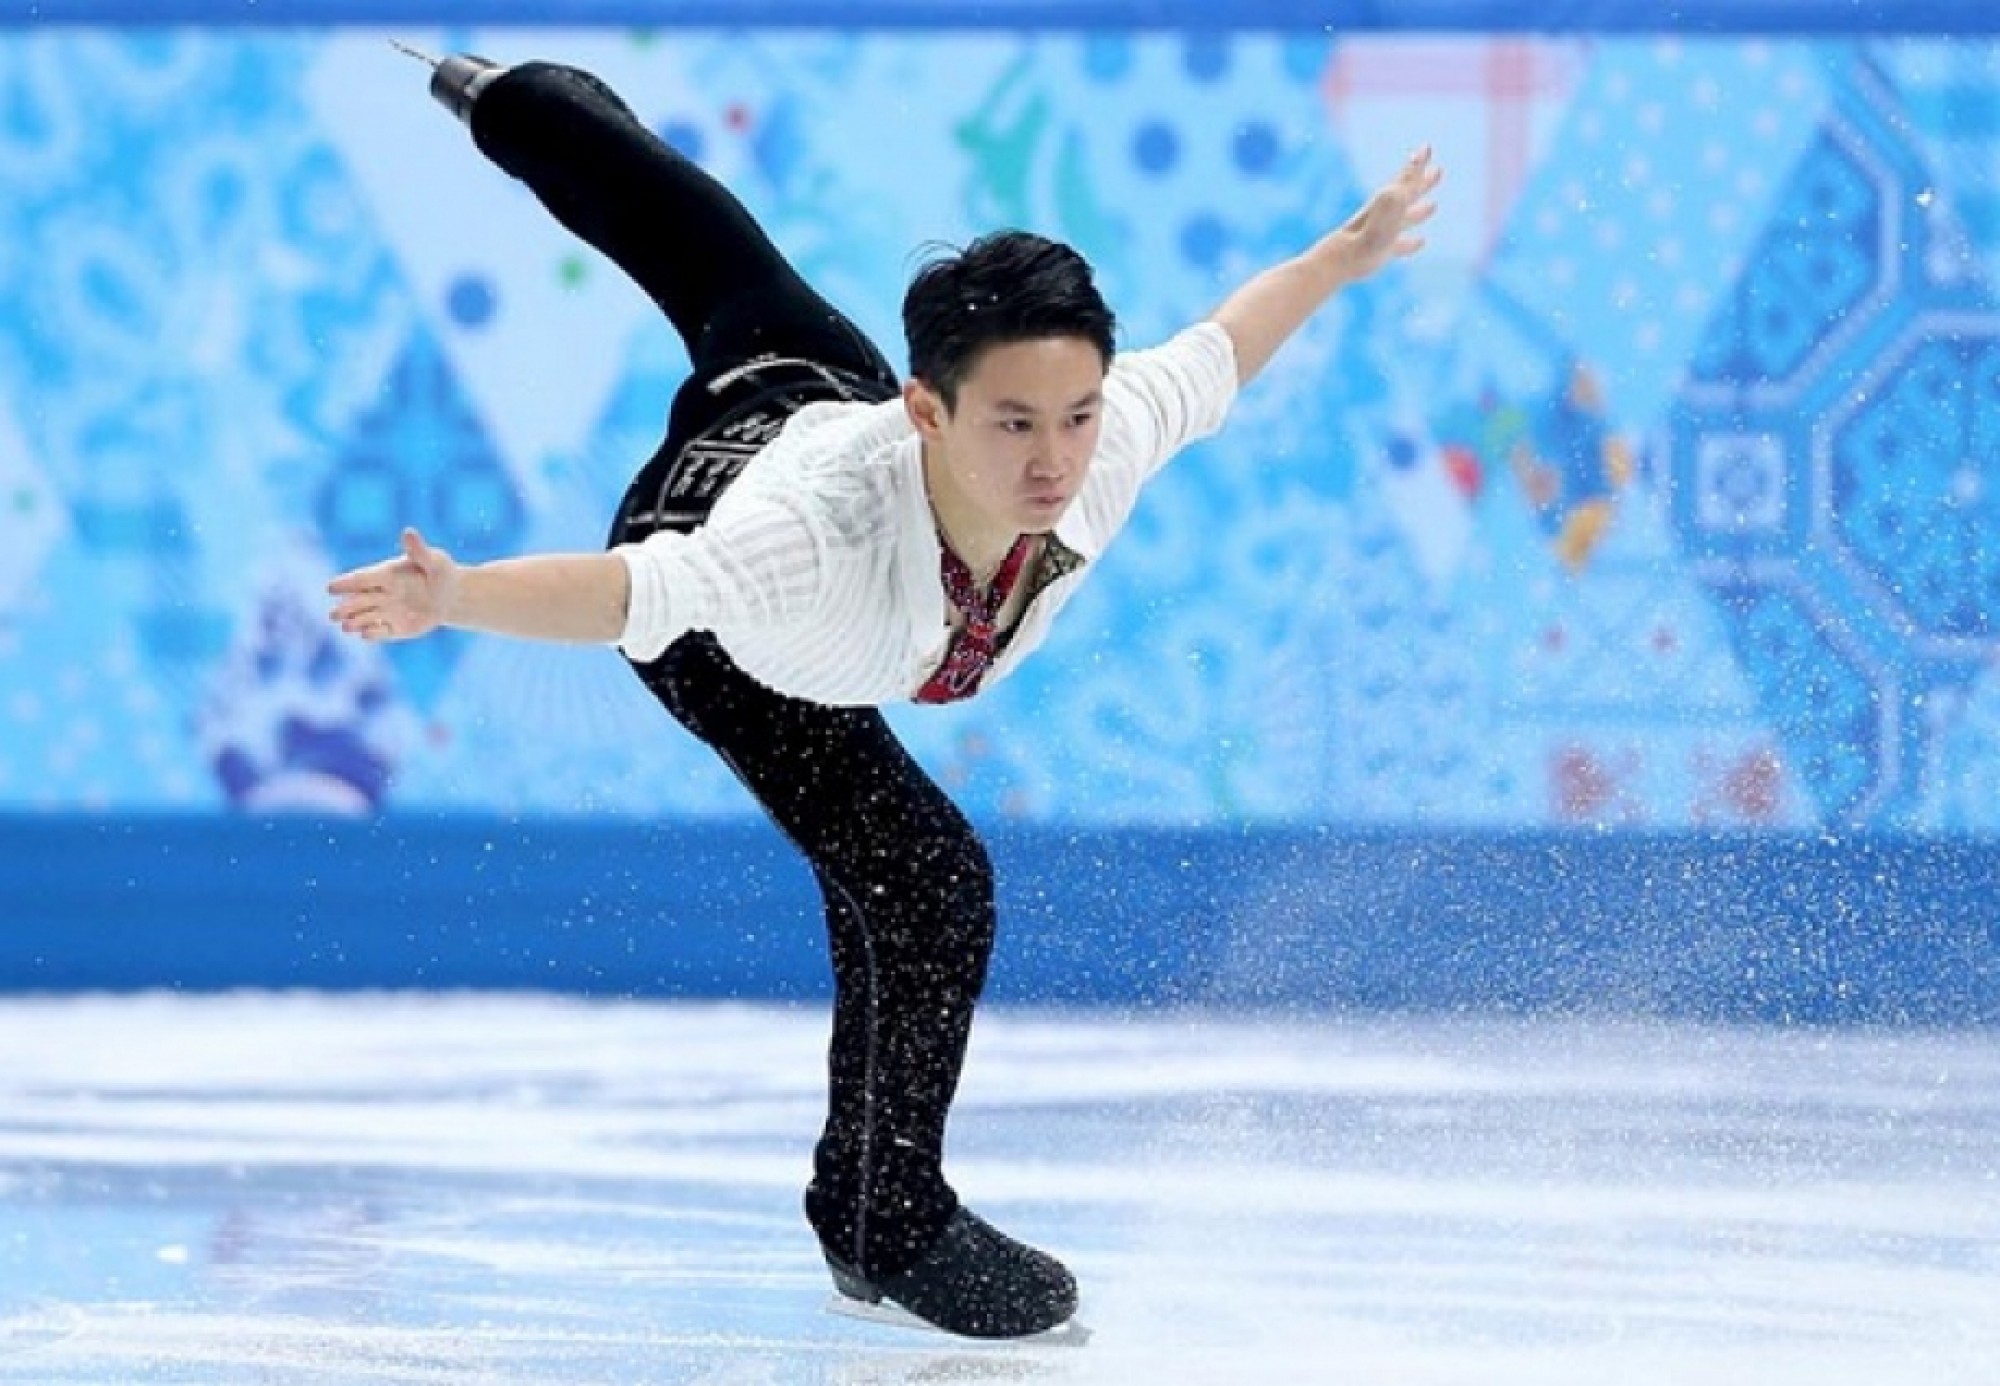 Academy of figure skating named Denis Ten to open in Kazakhstan